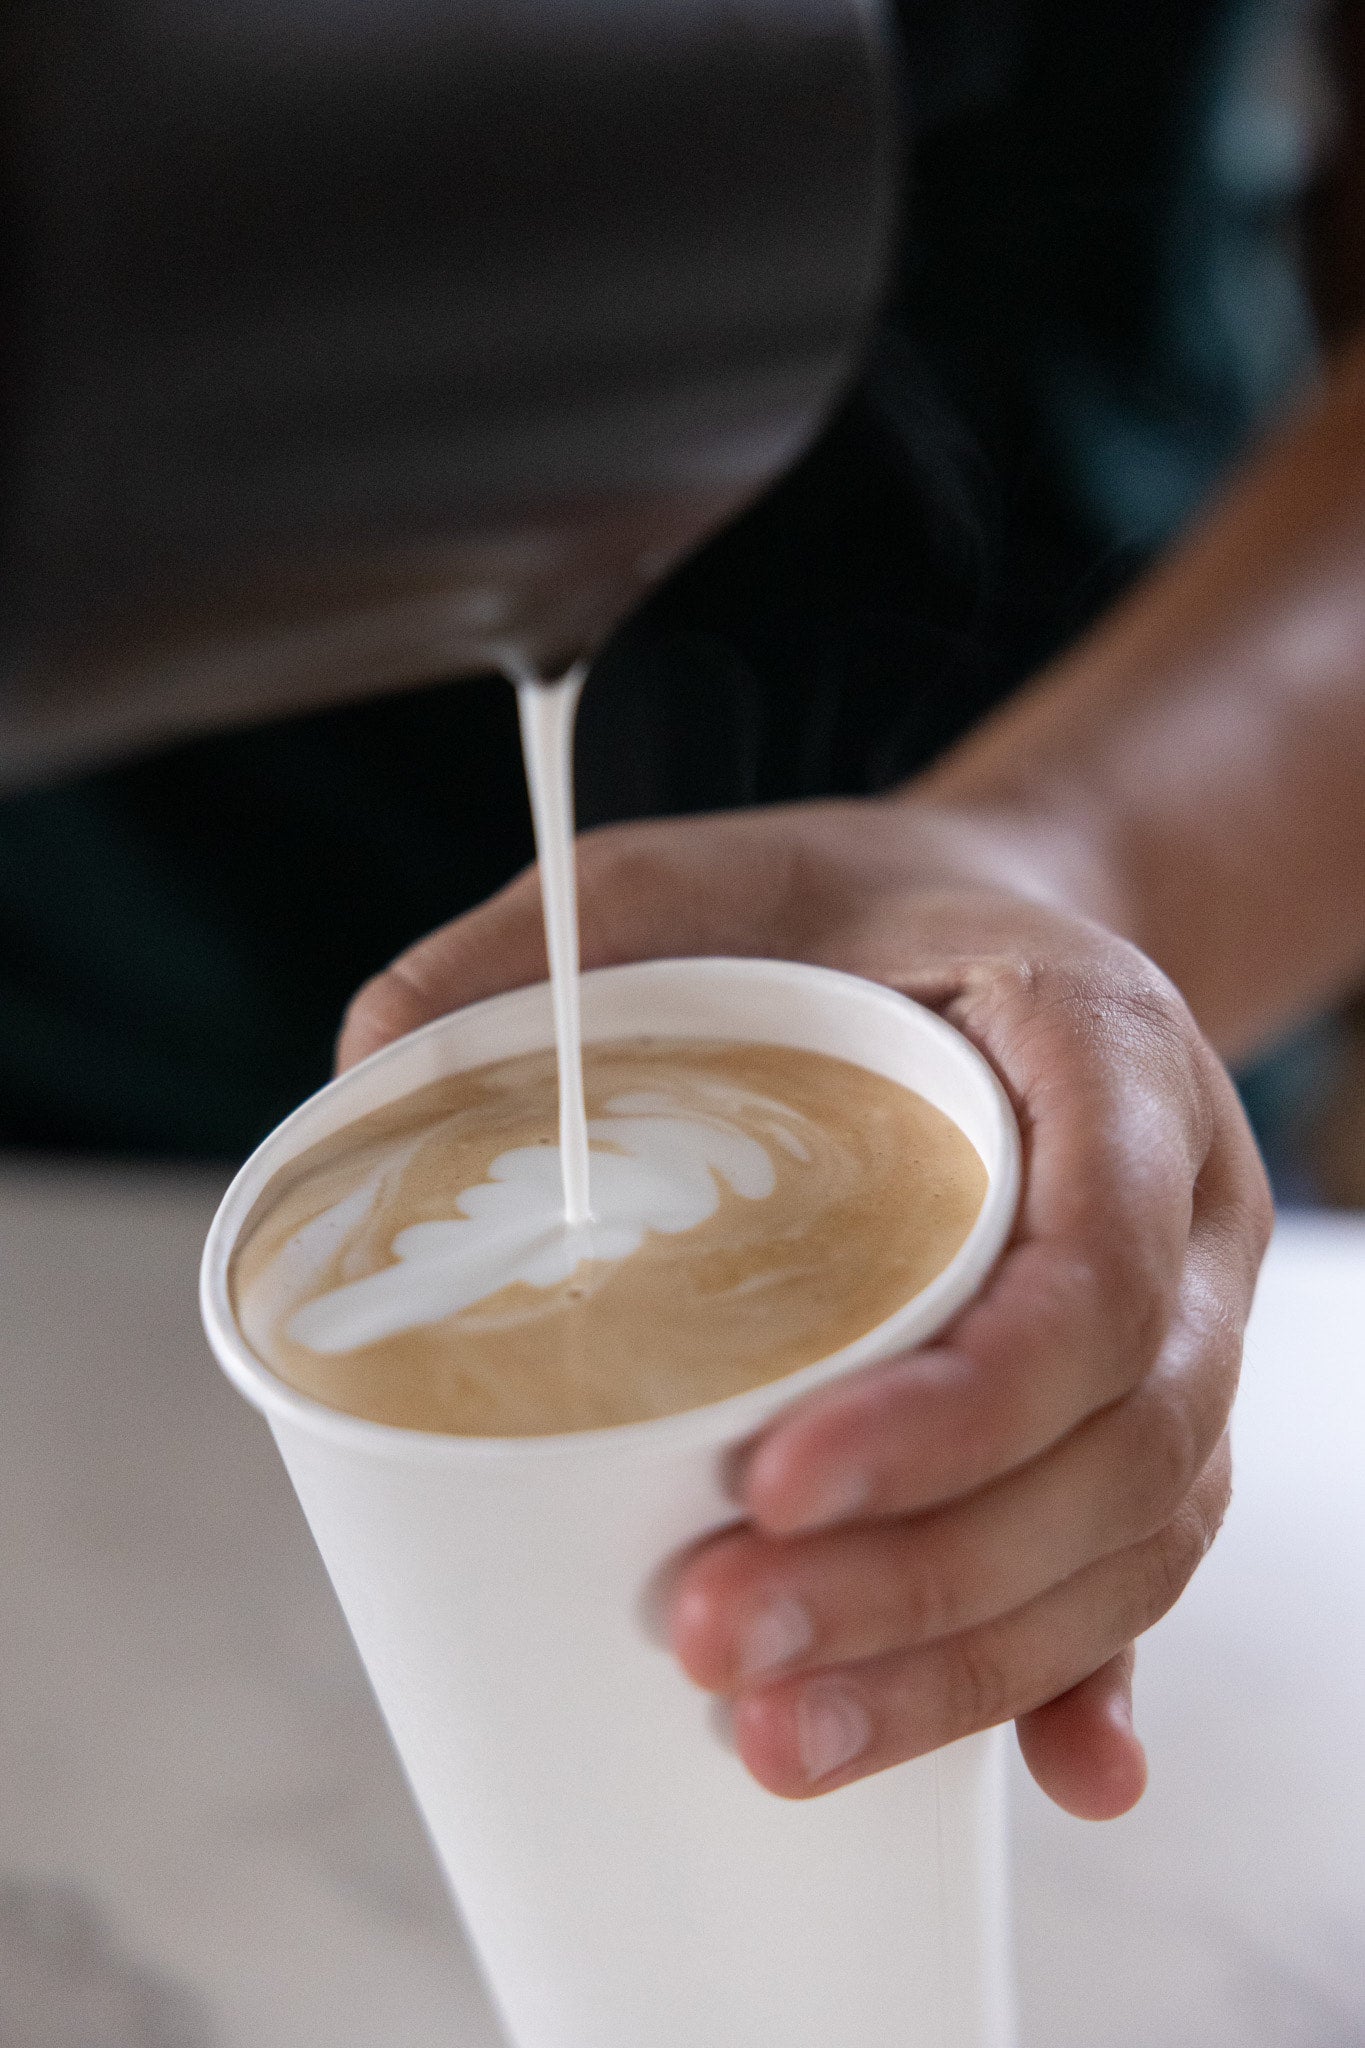 lv #lvcoffee #louisvuitton #dior #lvbag #latte #coffee #espresso